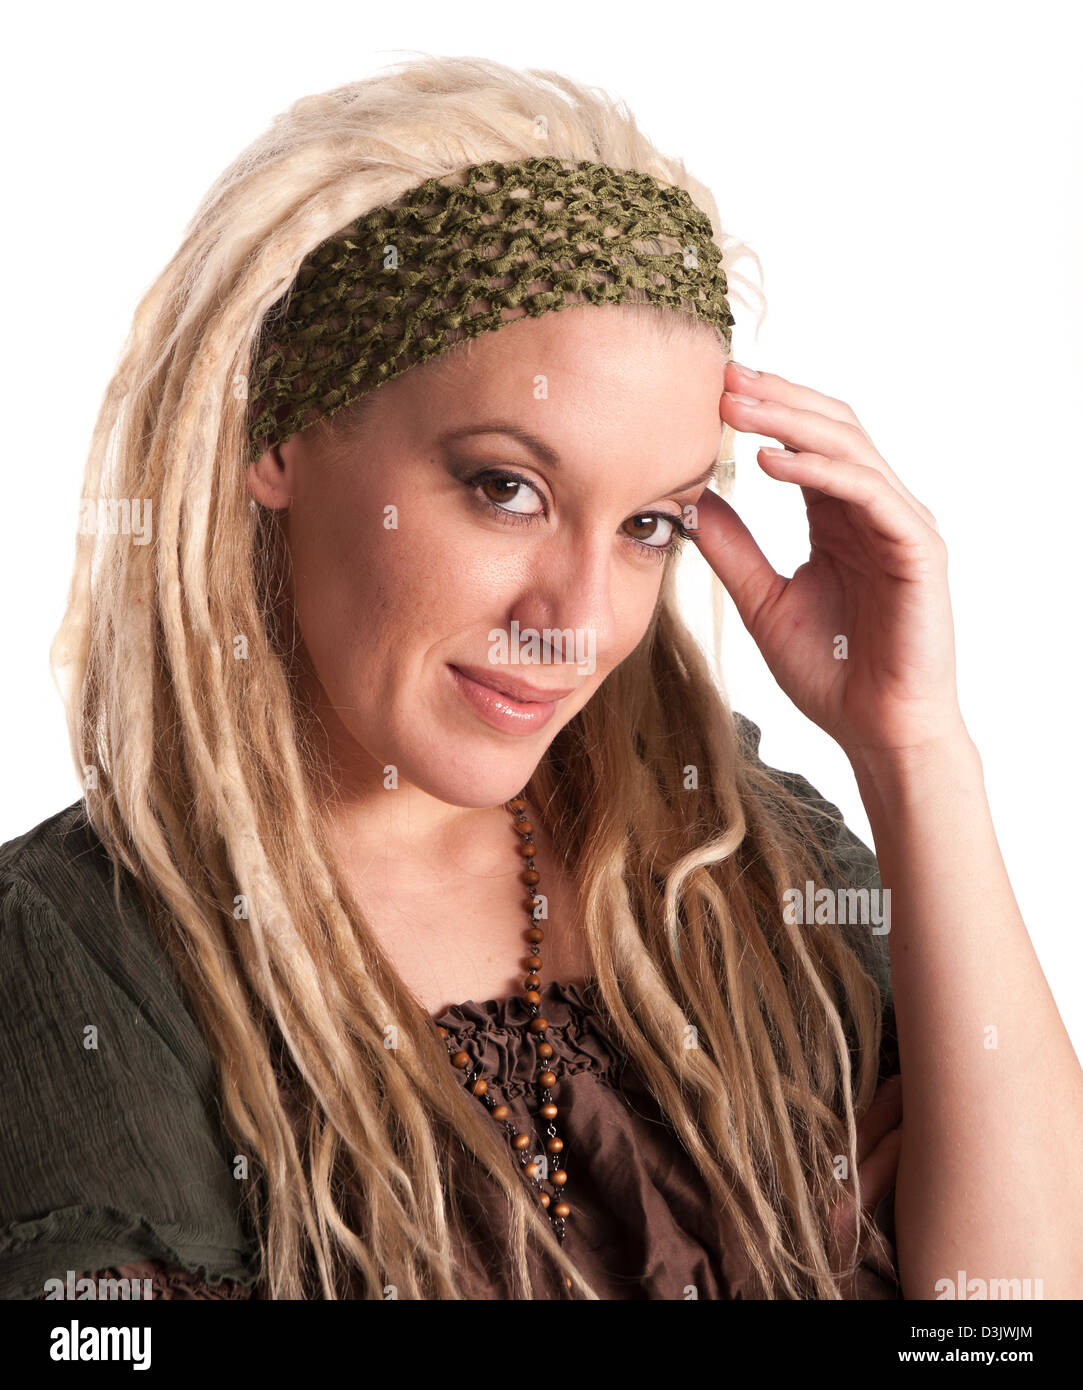 Urban Girl with blond dreadlocks - high fashion Stock Photo